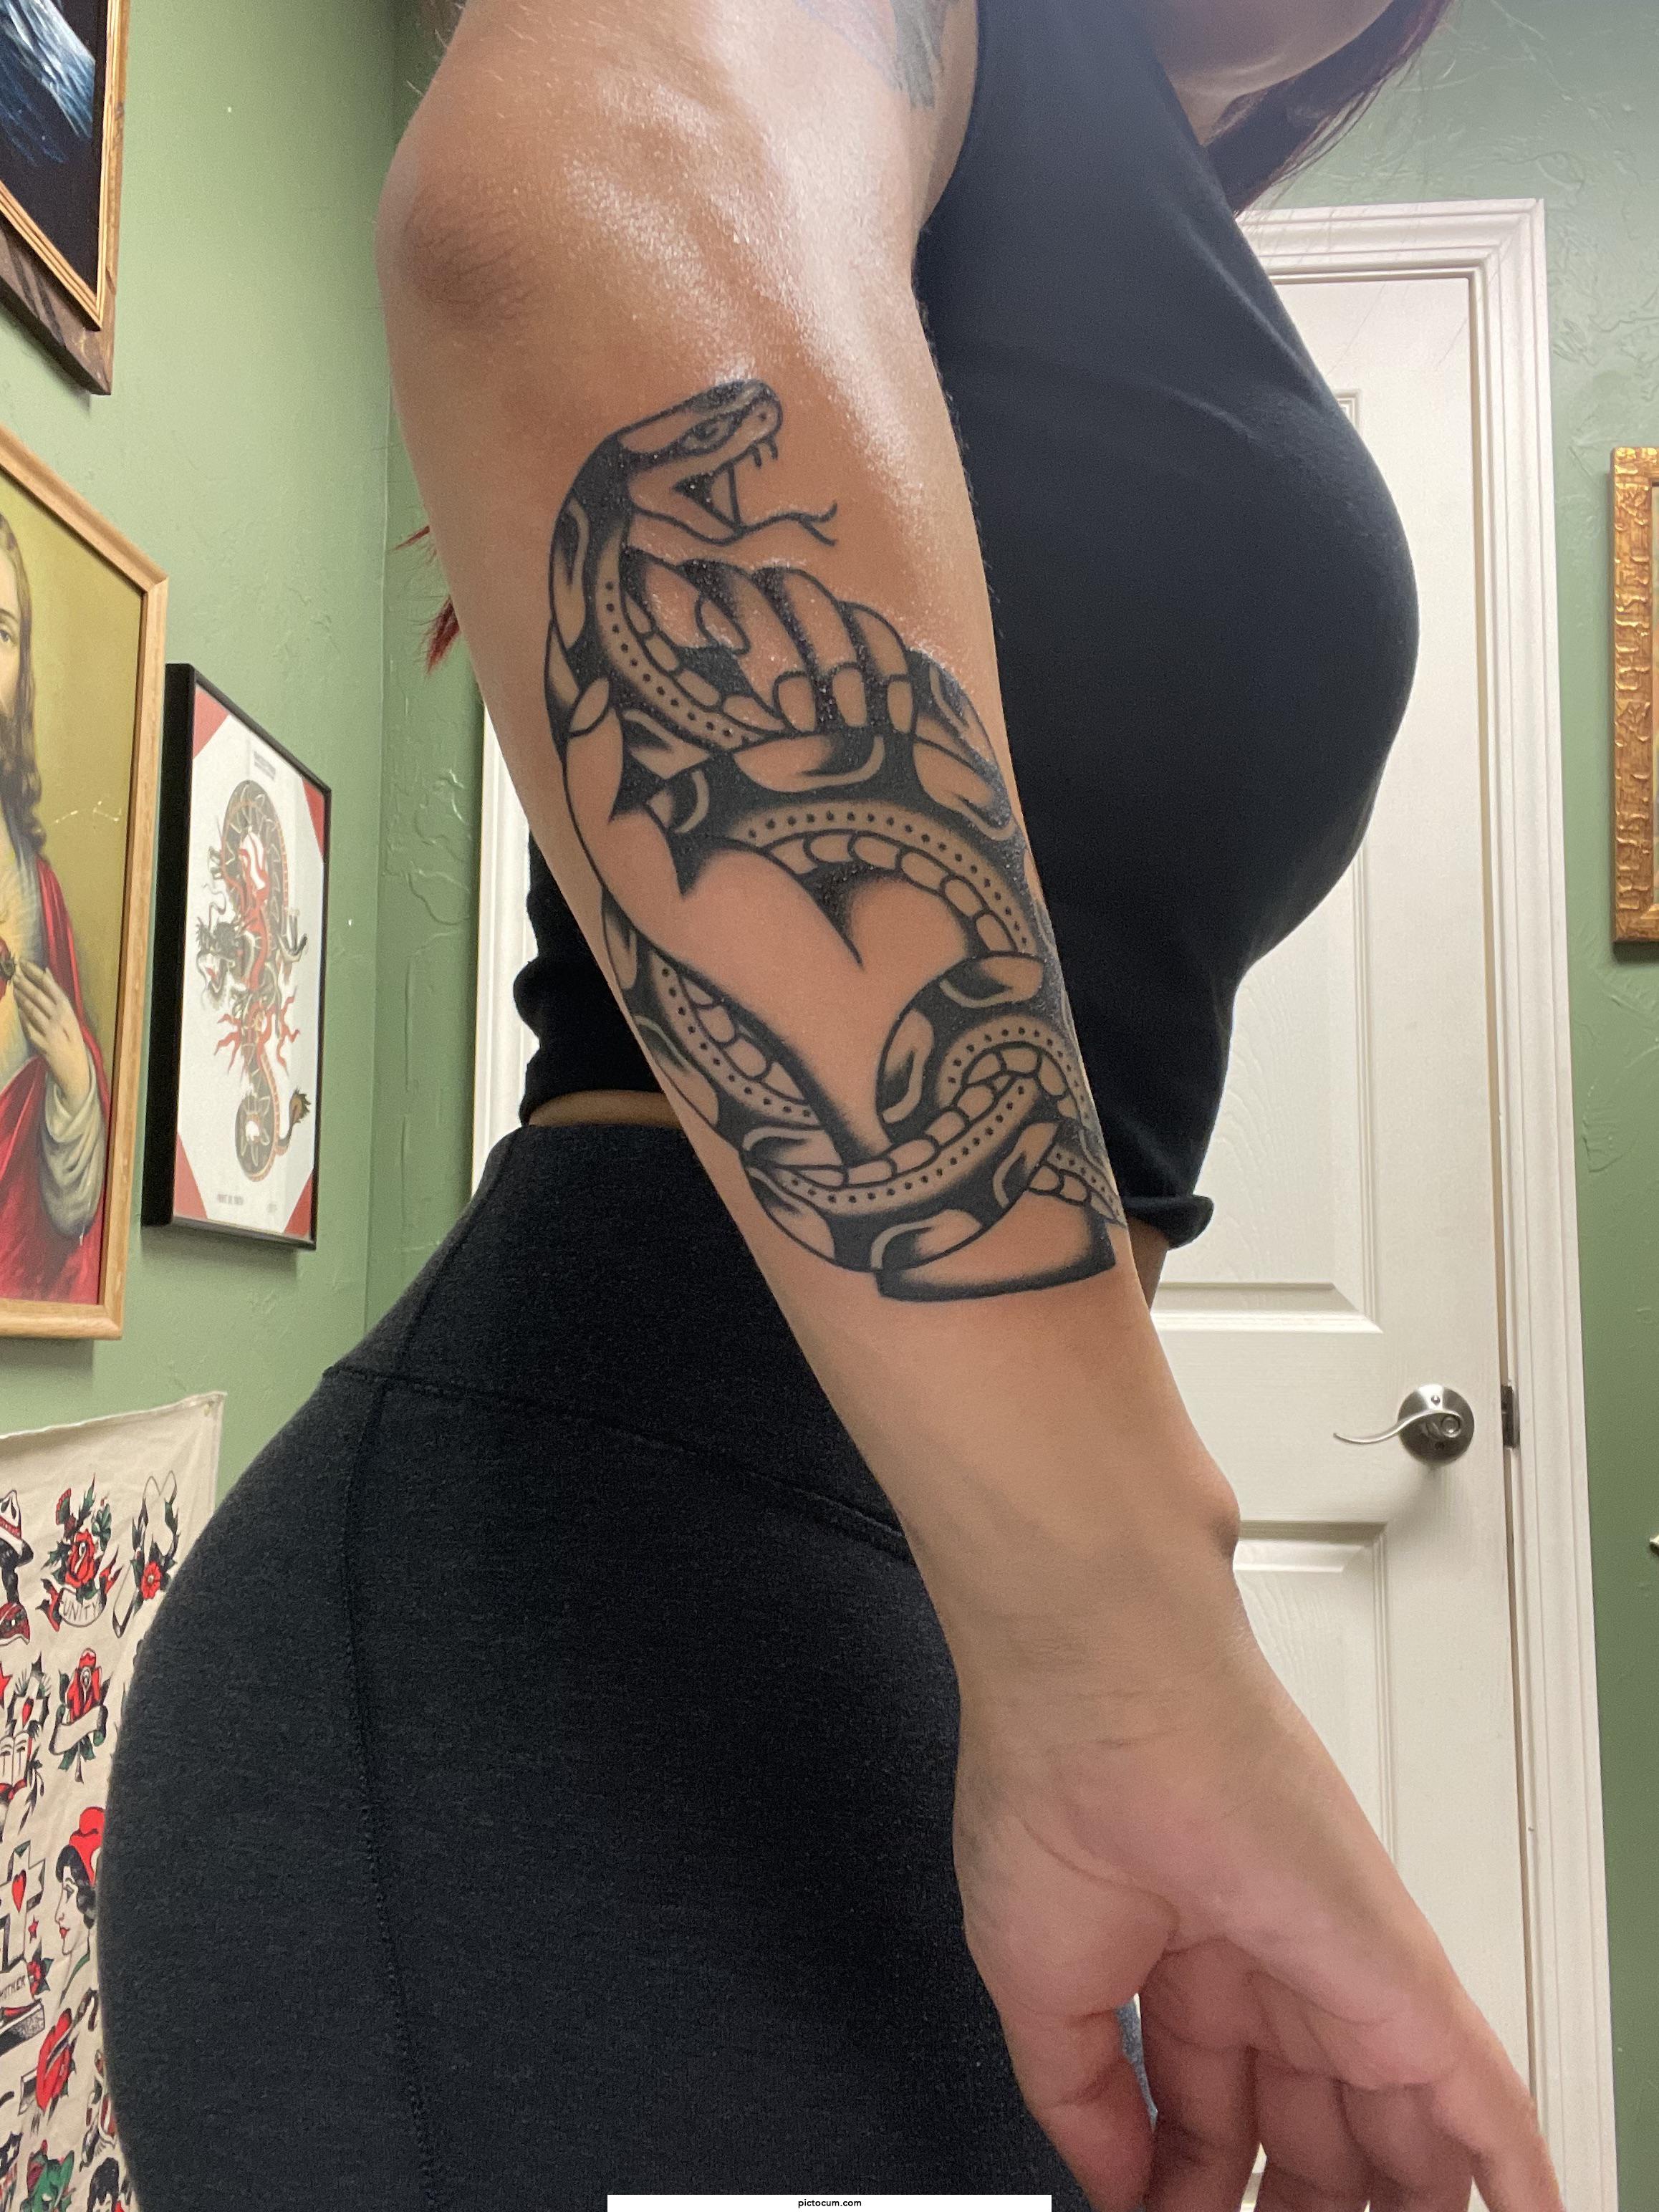 Do you guys like latinas with tattoos?